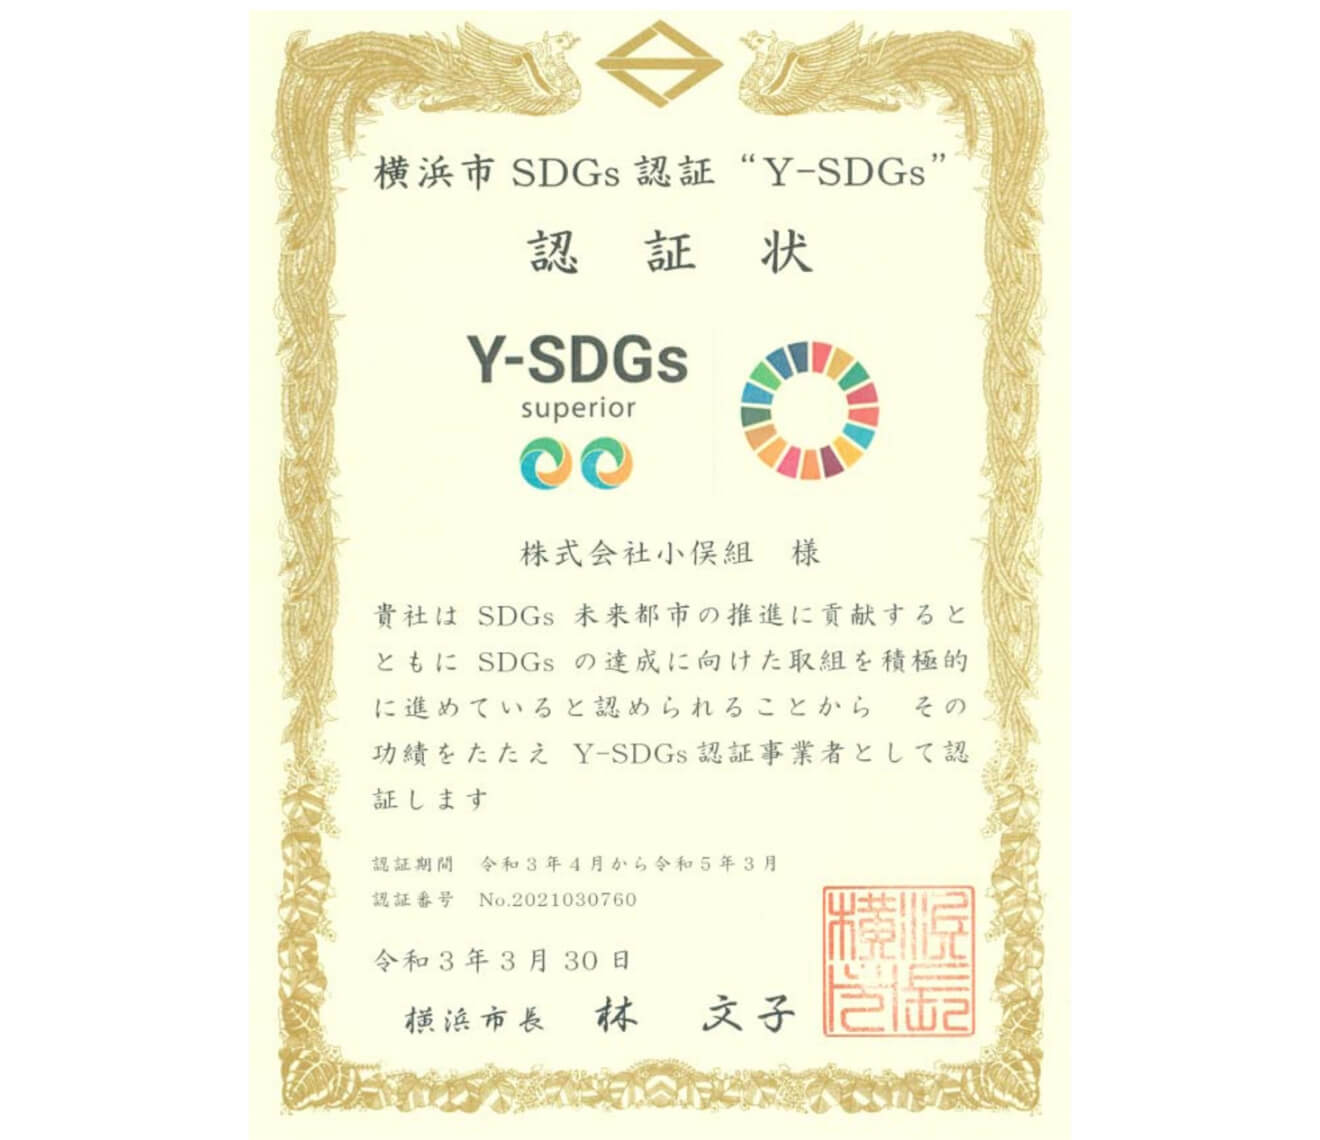 Y-SDGs/横浜市SDGs認証”Y-SDGs”認証状